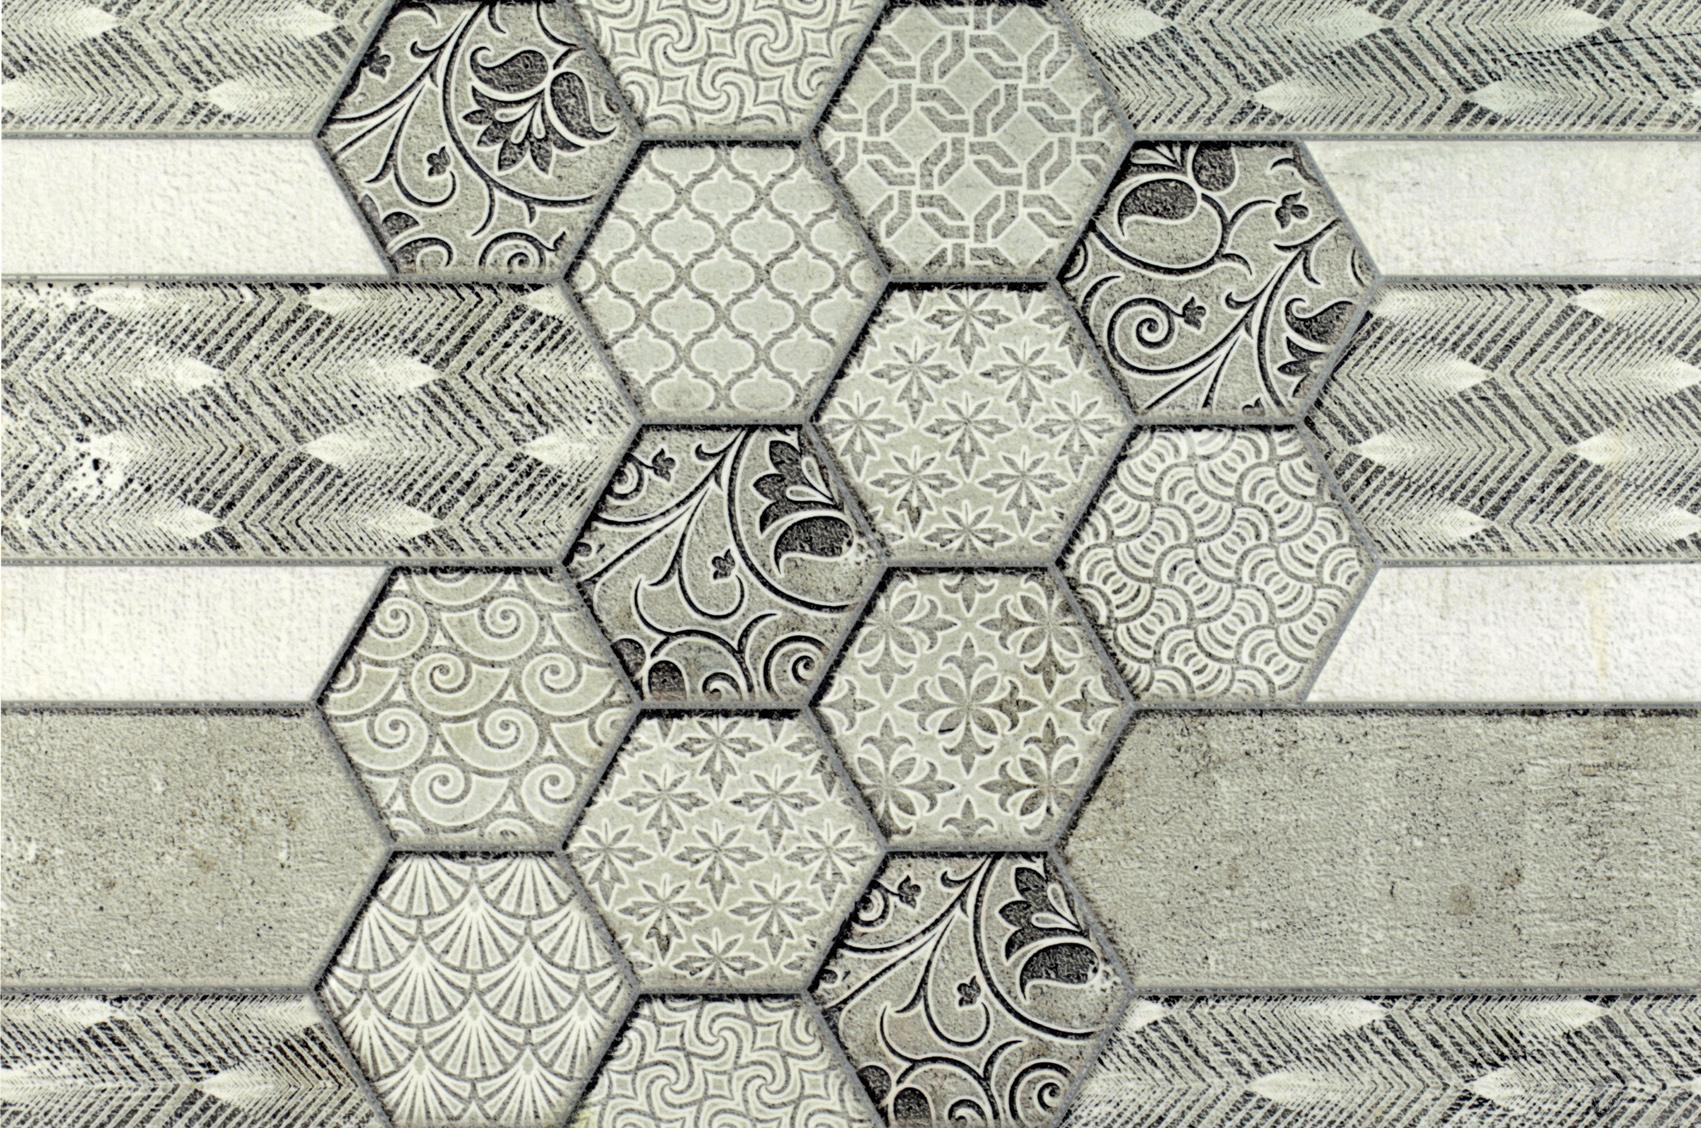 Matte Finish Tiles for Bathroom Tiles, Kitchen Tiles, Accent Tiles